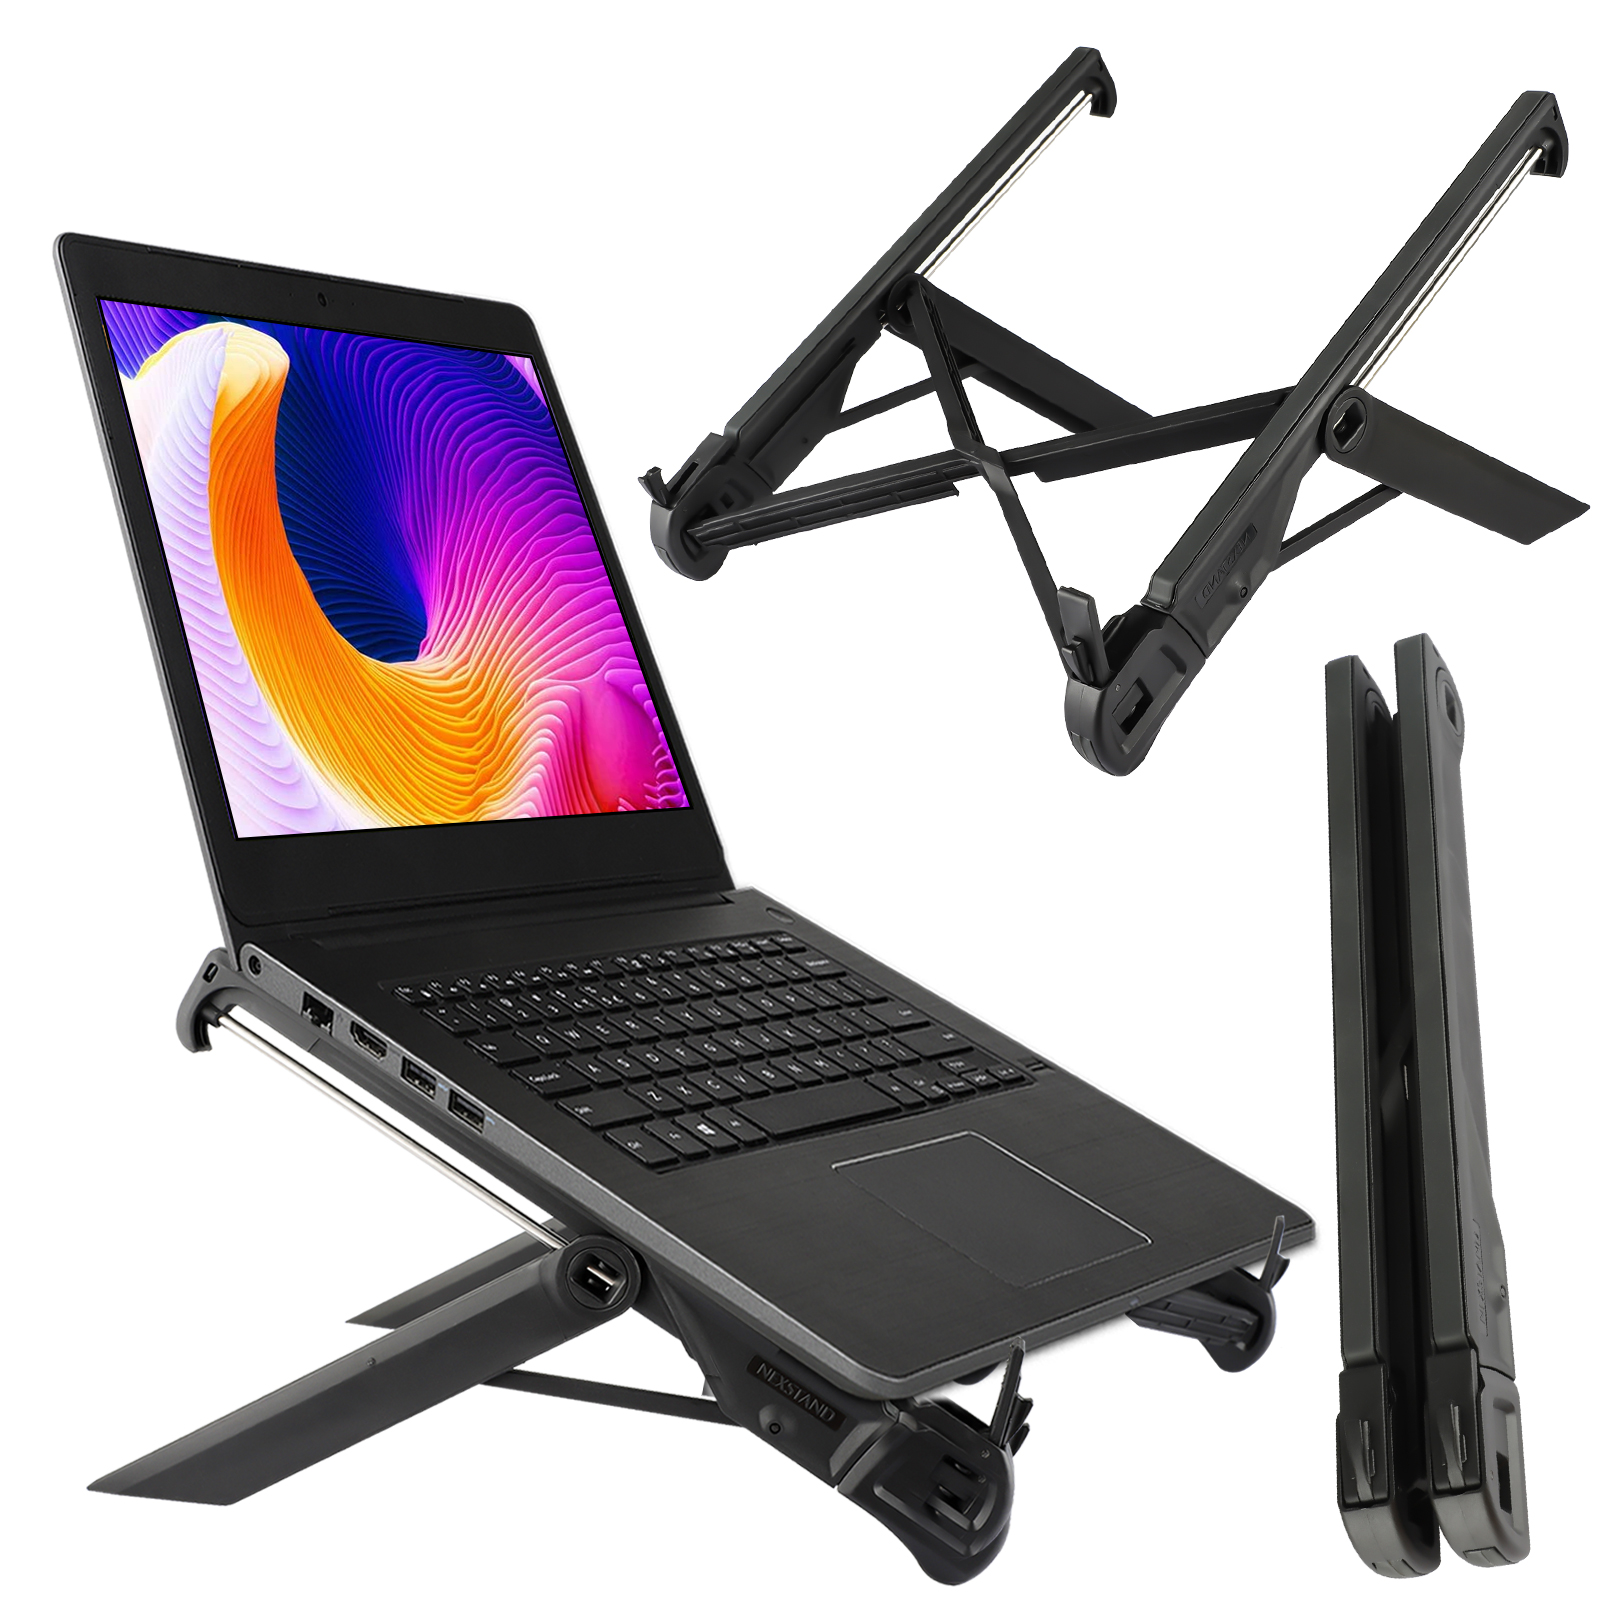 EEEkit Universal Laptop Stand with Height Adjustment, Ventilated Desktop Holder Supports iPad, Tablet, MacBook, Black - image 1 of 9